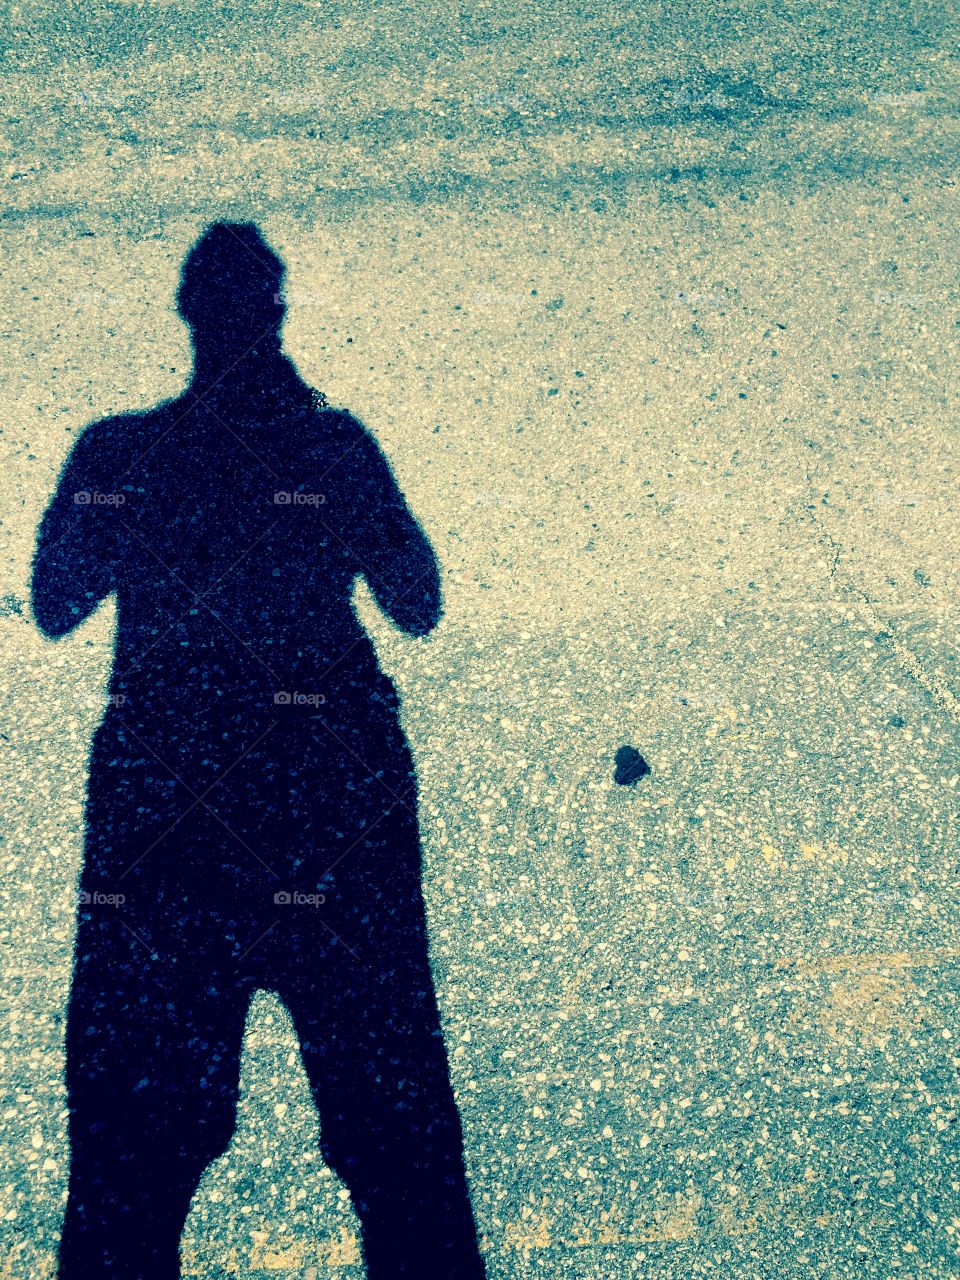 Woman's shadow on street